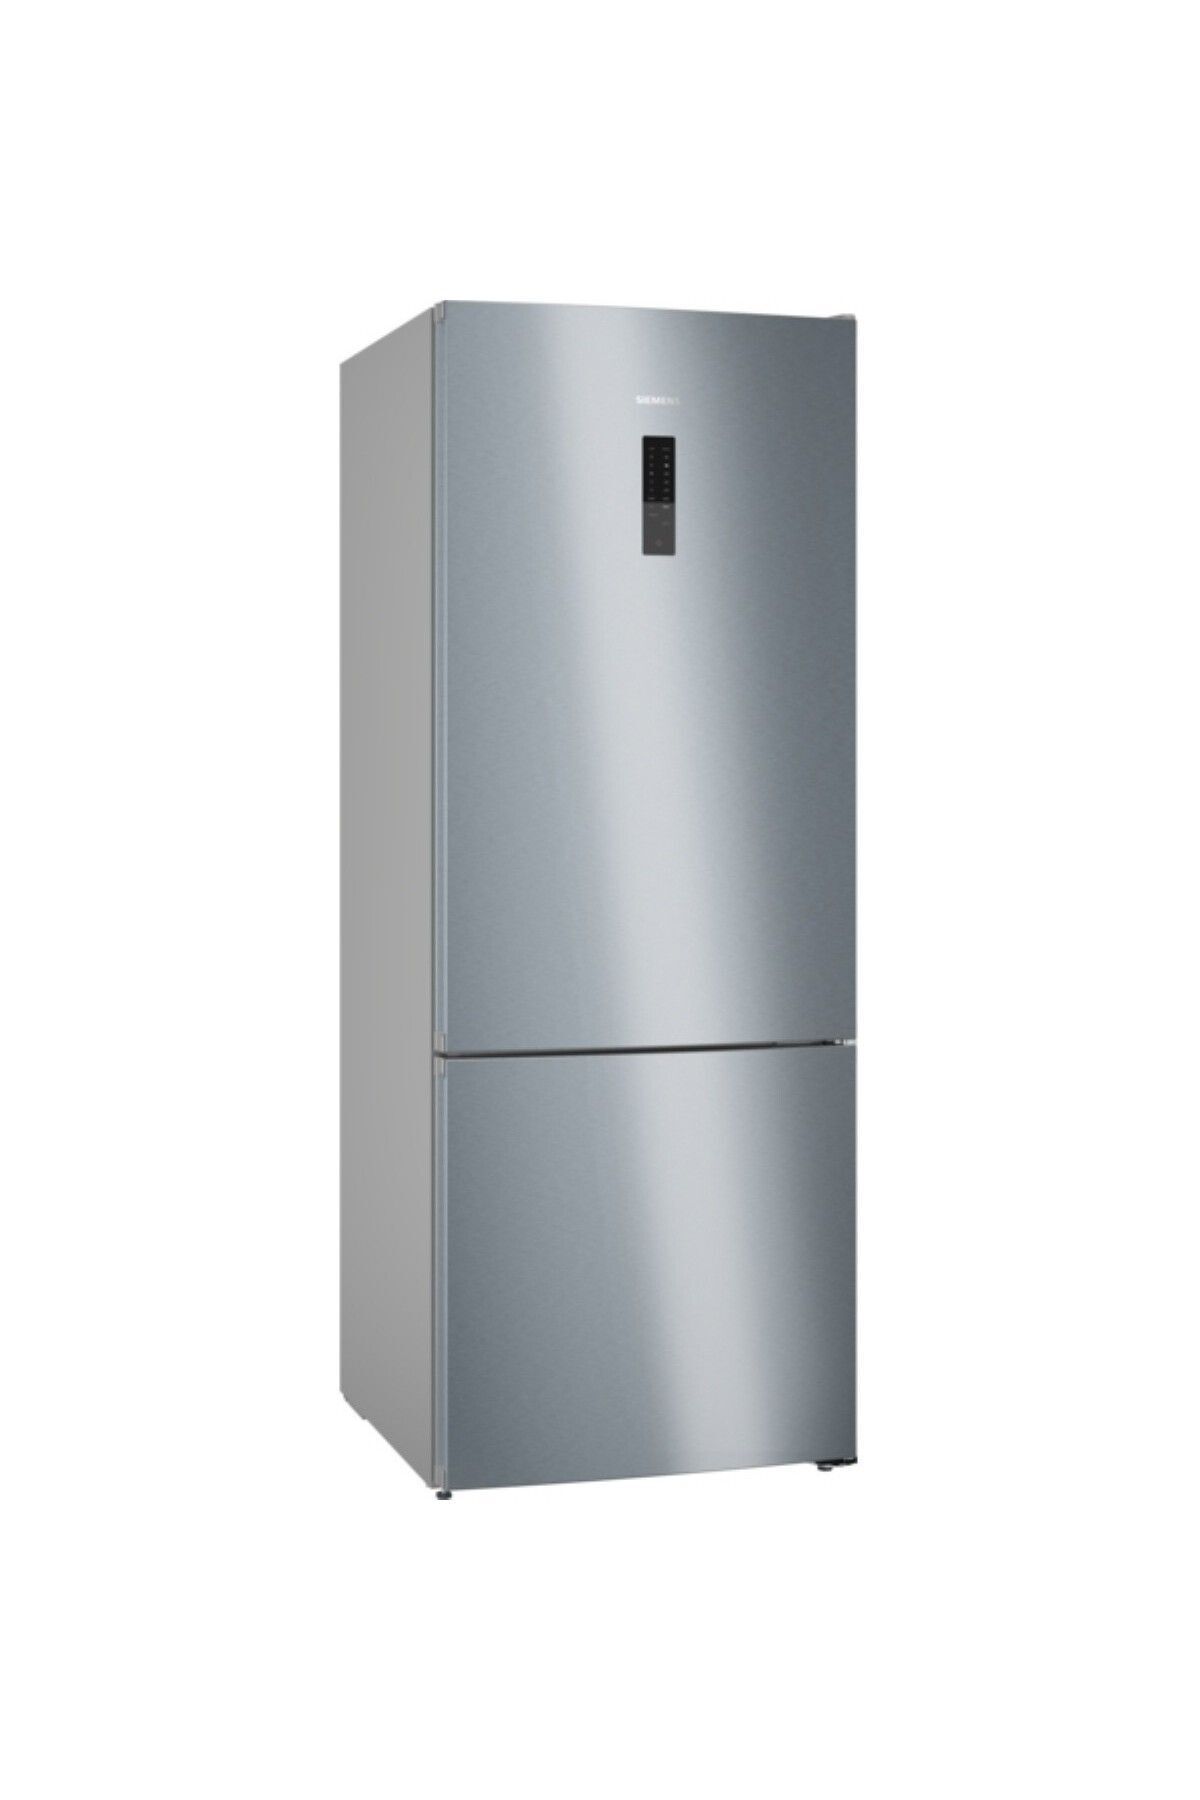 Siemens Kg55ncıe0n Alttan Donduruculu Buzdolabı 186 X 70 Cm Kolay Temizlenebilir Inox